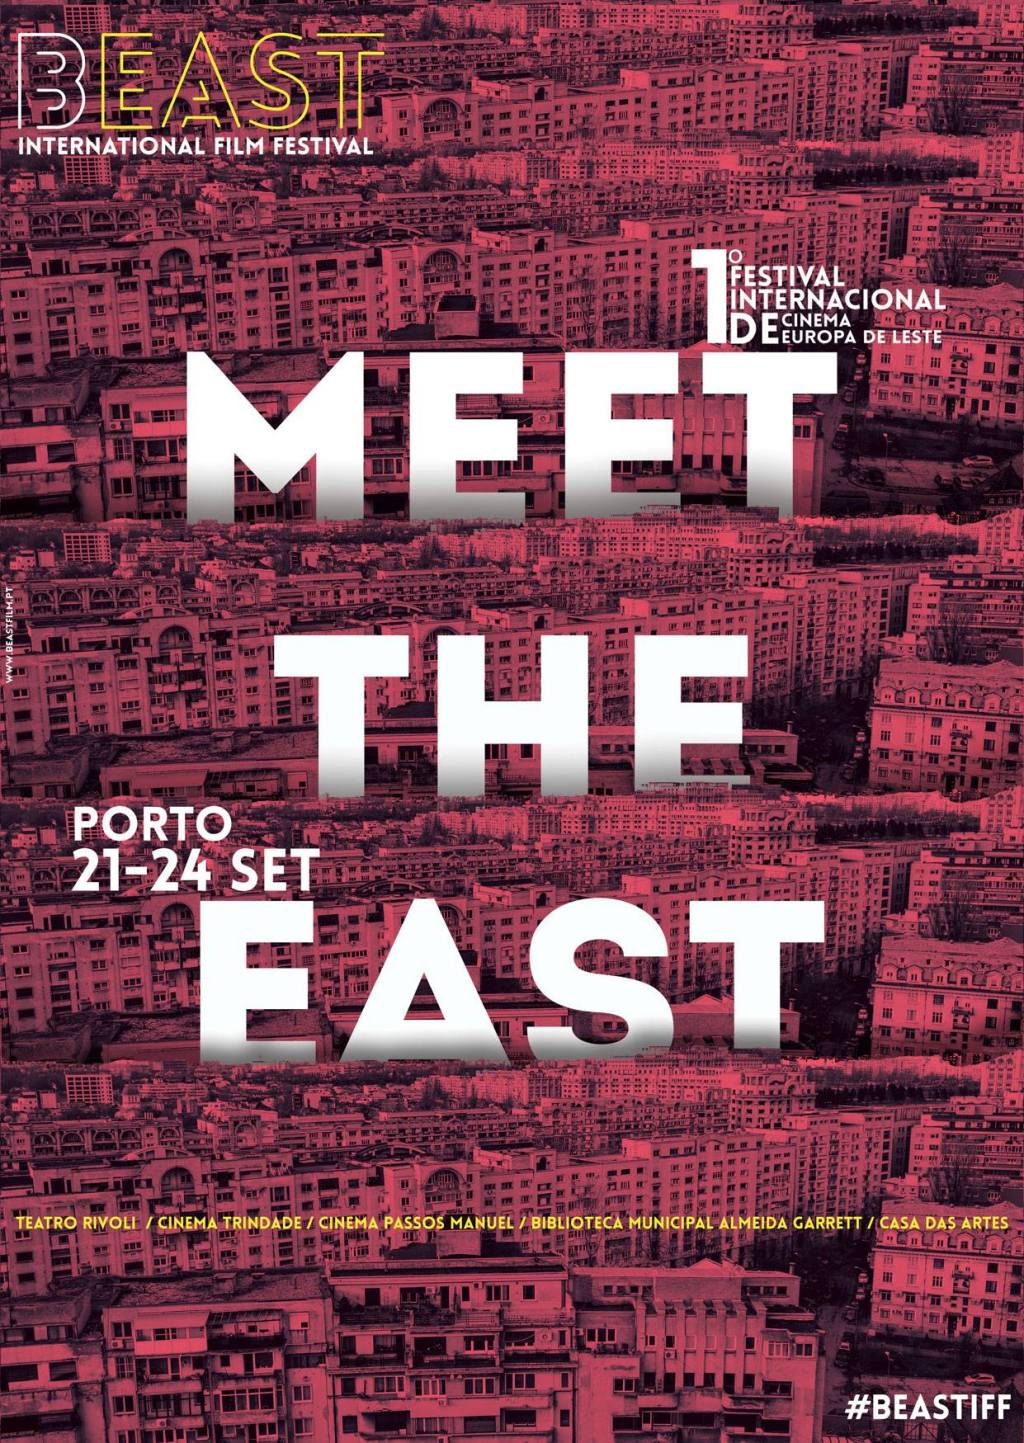 BEAST – International Film Festival | 21-24 de Setembro | Porto